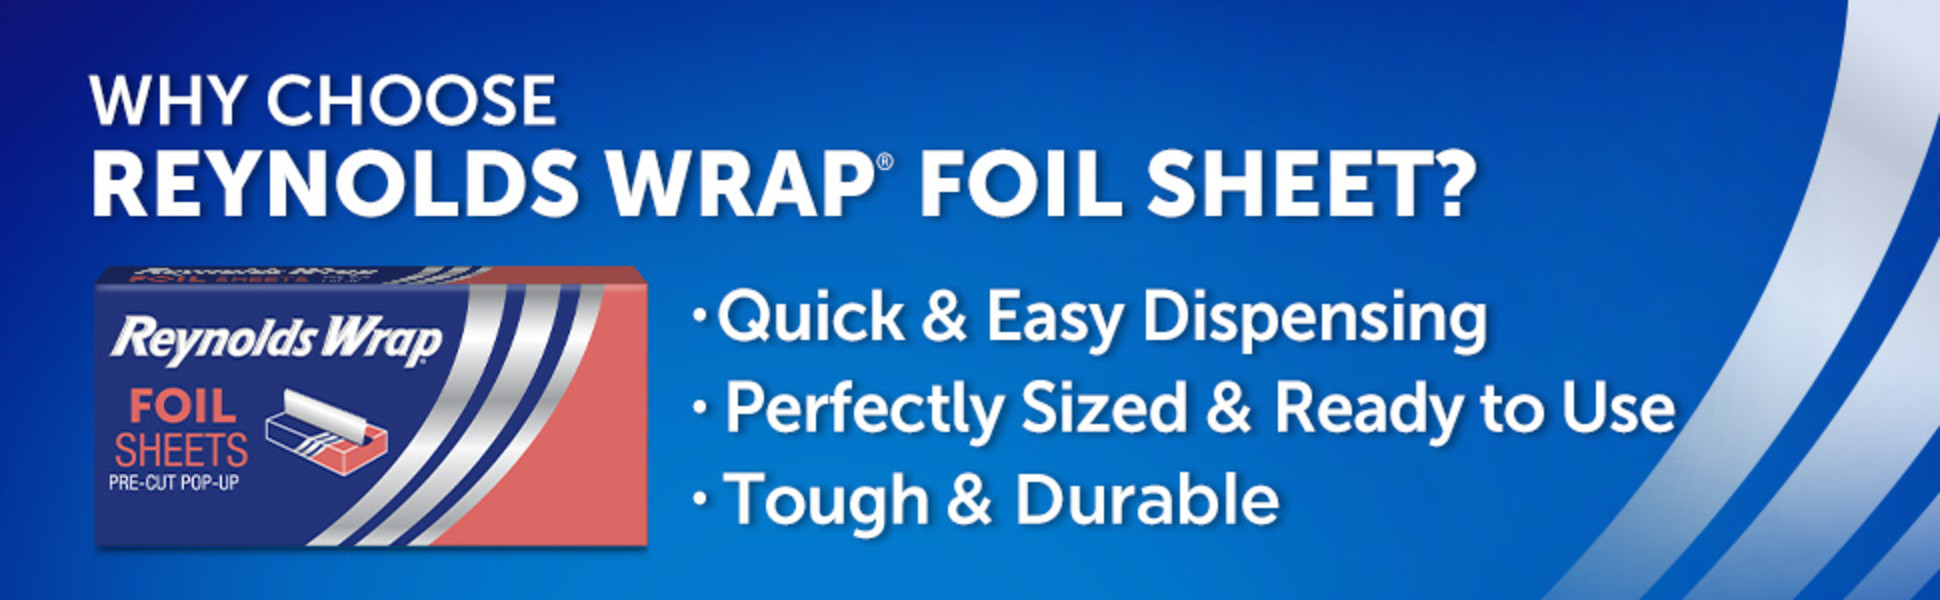 Reynold's Wrap Aluminum Pre-cut Pop-up Foil Sheets 14”x10 ¼” 25 Ct